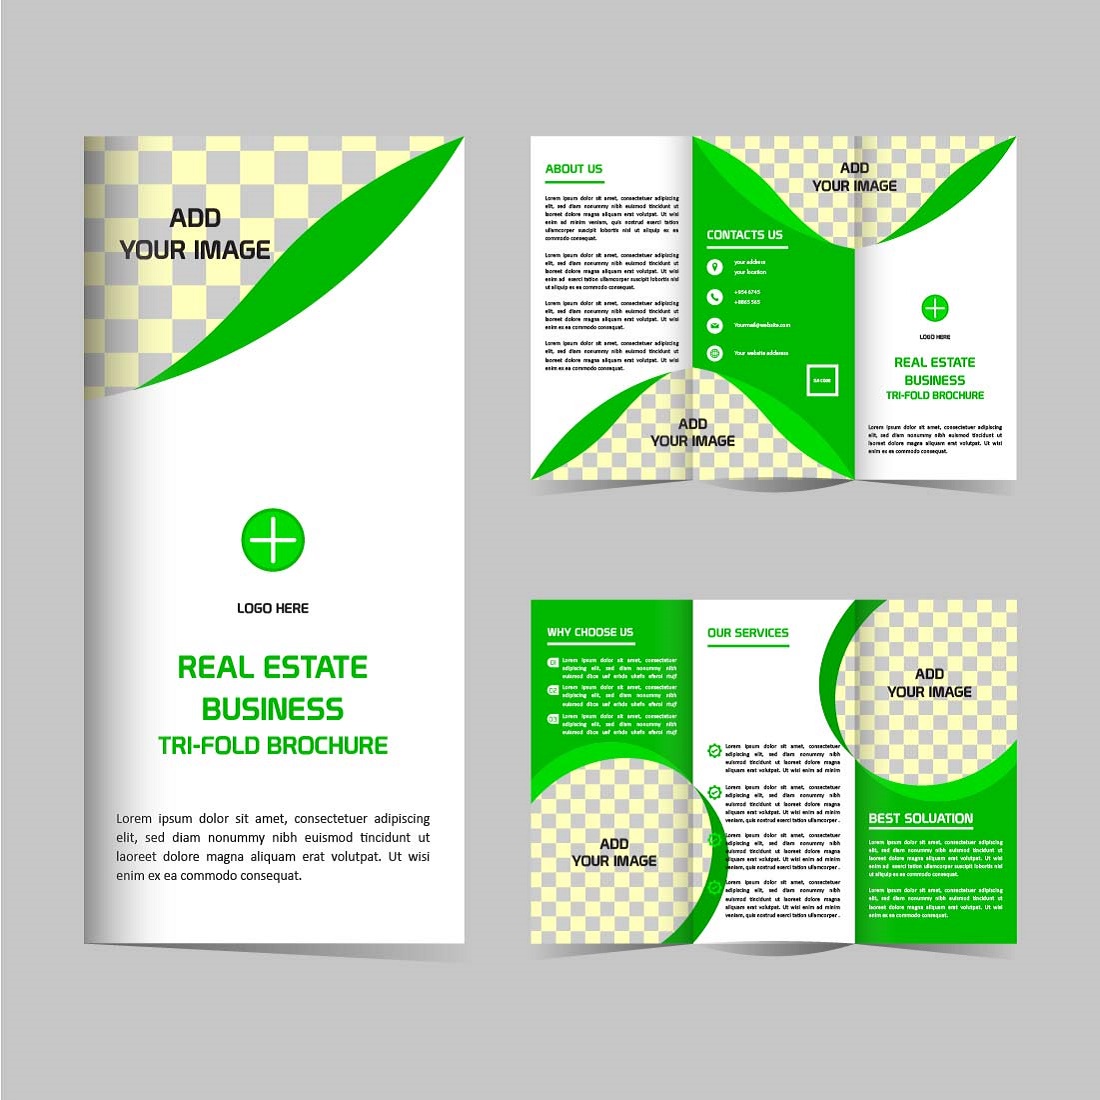 Modern Tri fold real estate brochure design template editable resizable cover image.